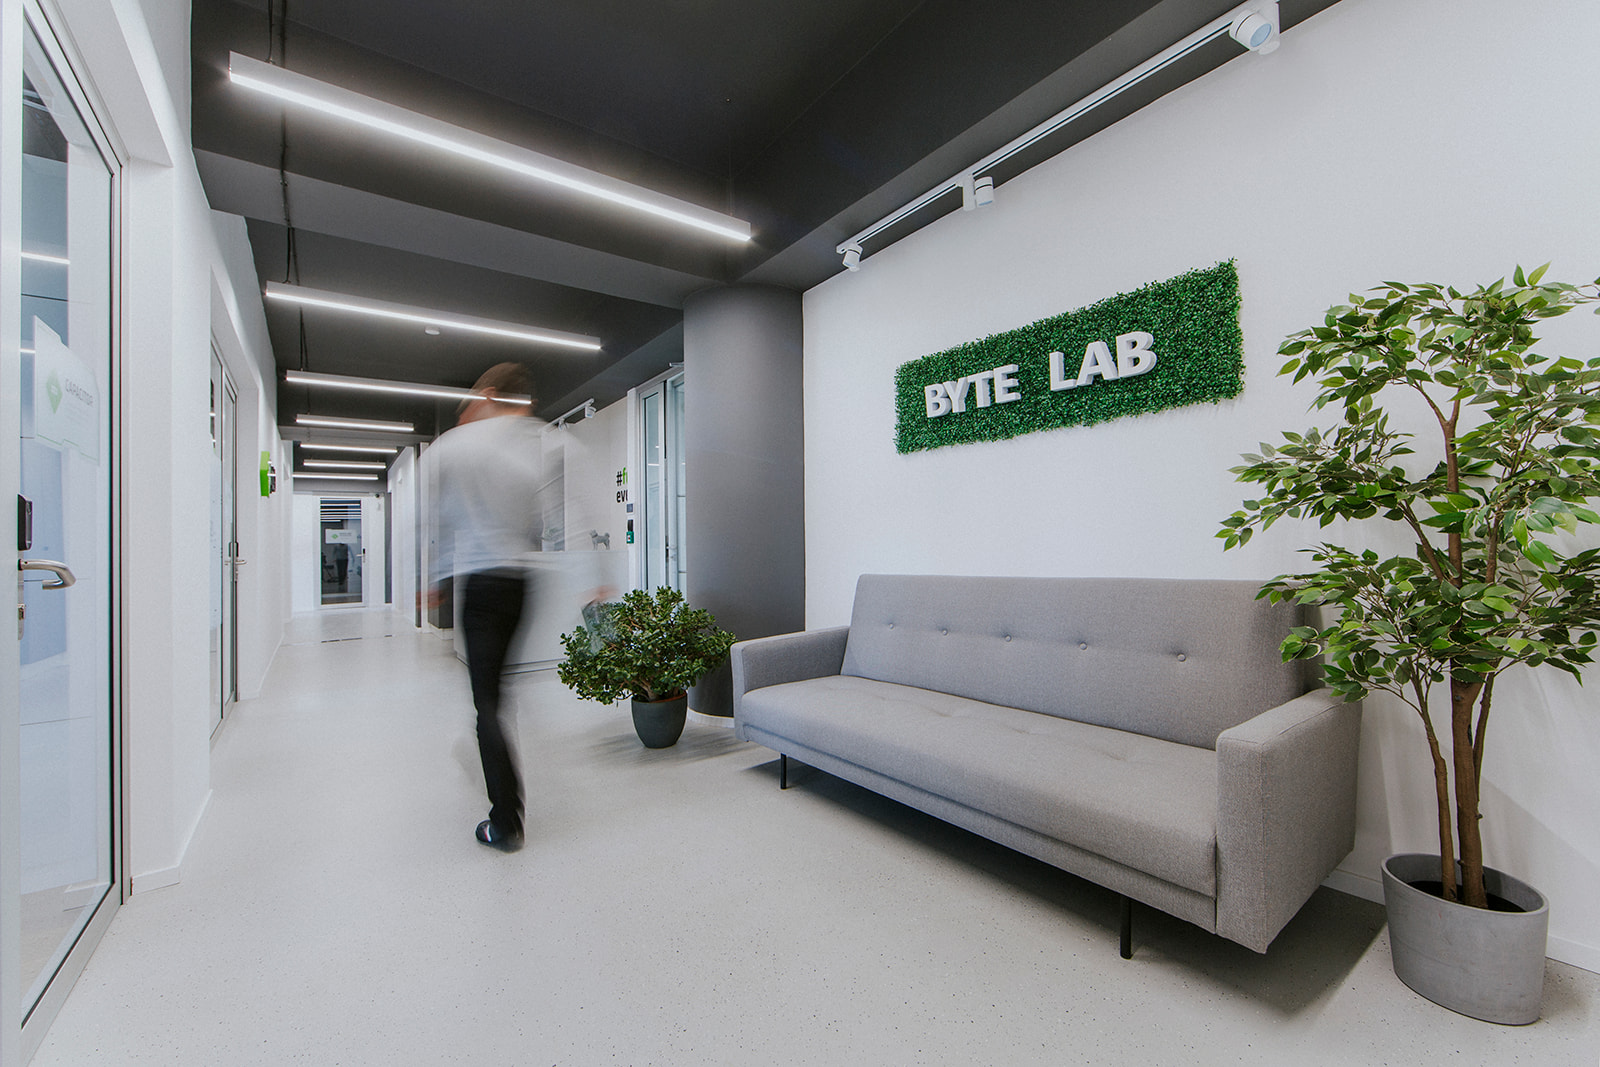 Byte Lab Office